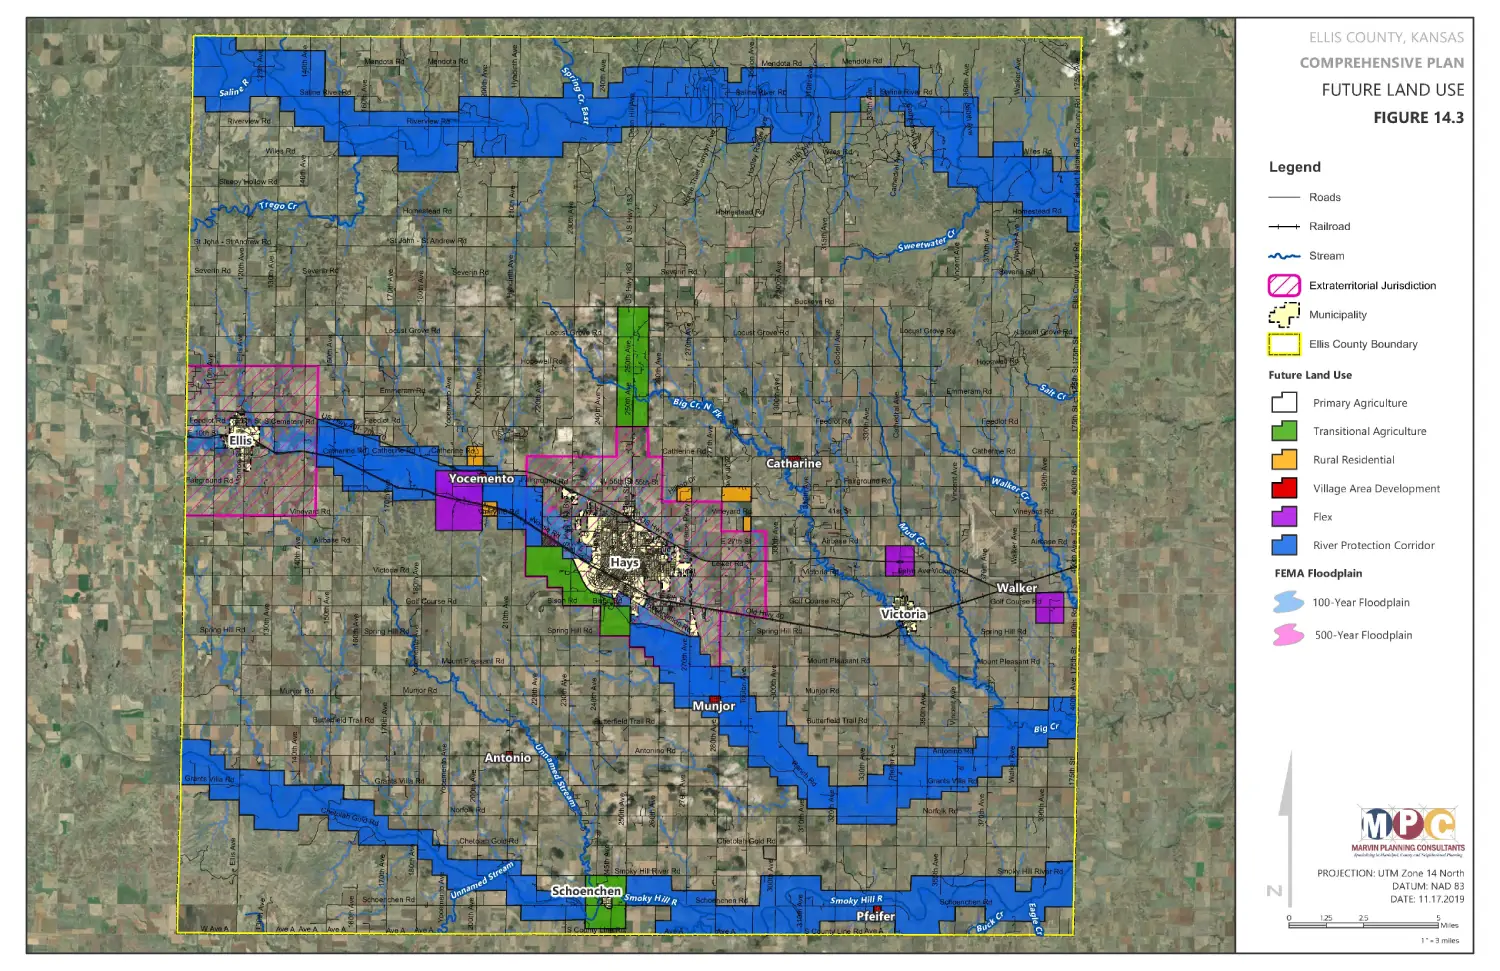 Fig 14.3_Ellis County Future Land Use (1)